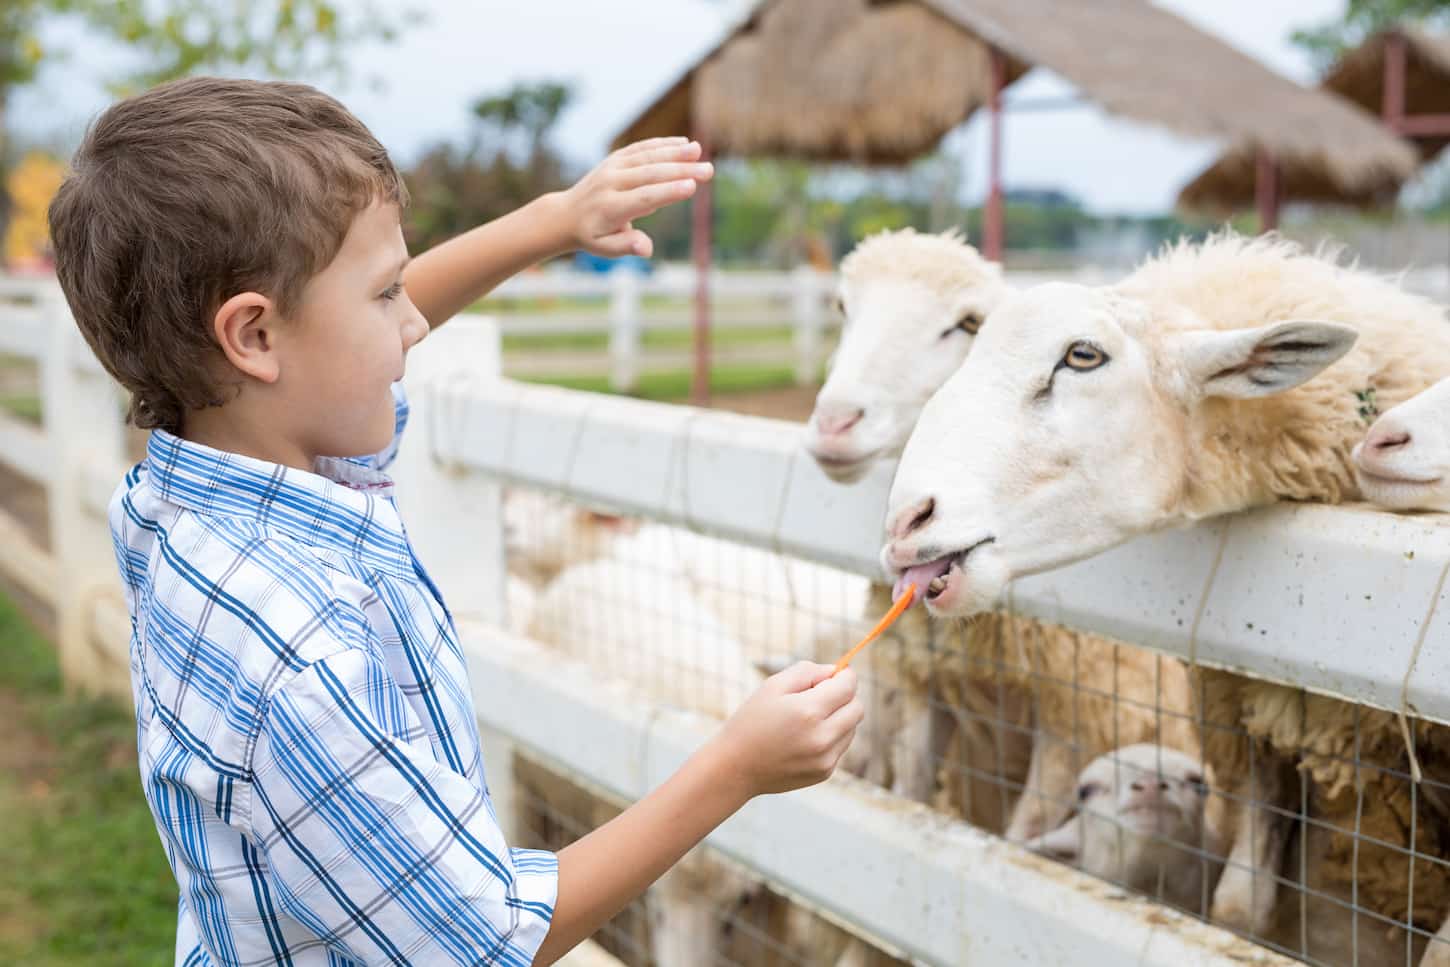 An image of a Little boy on a farm petting a sheep.